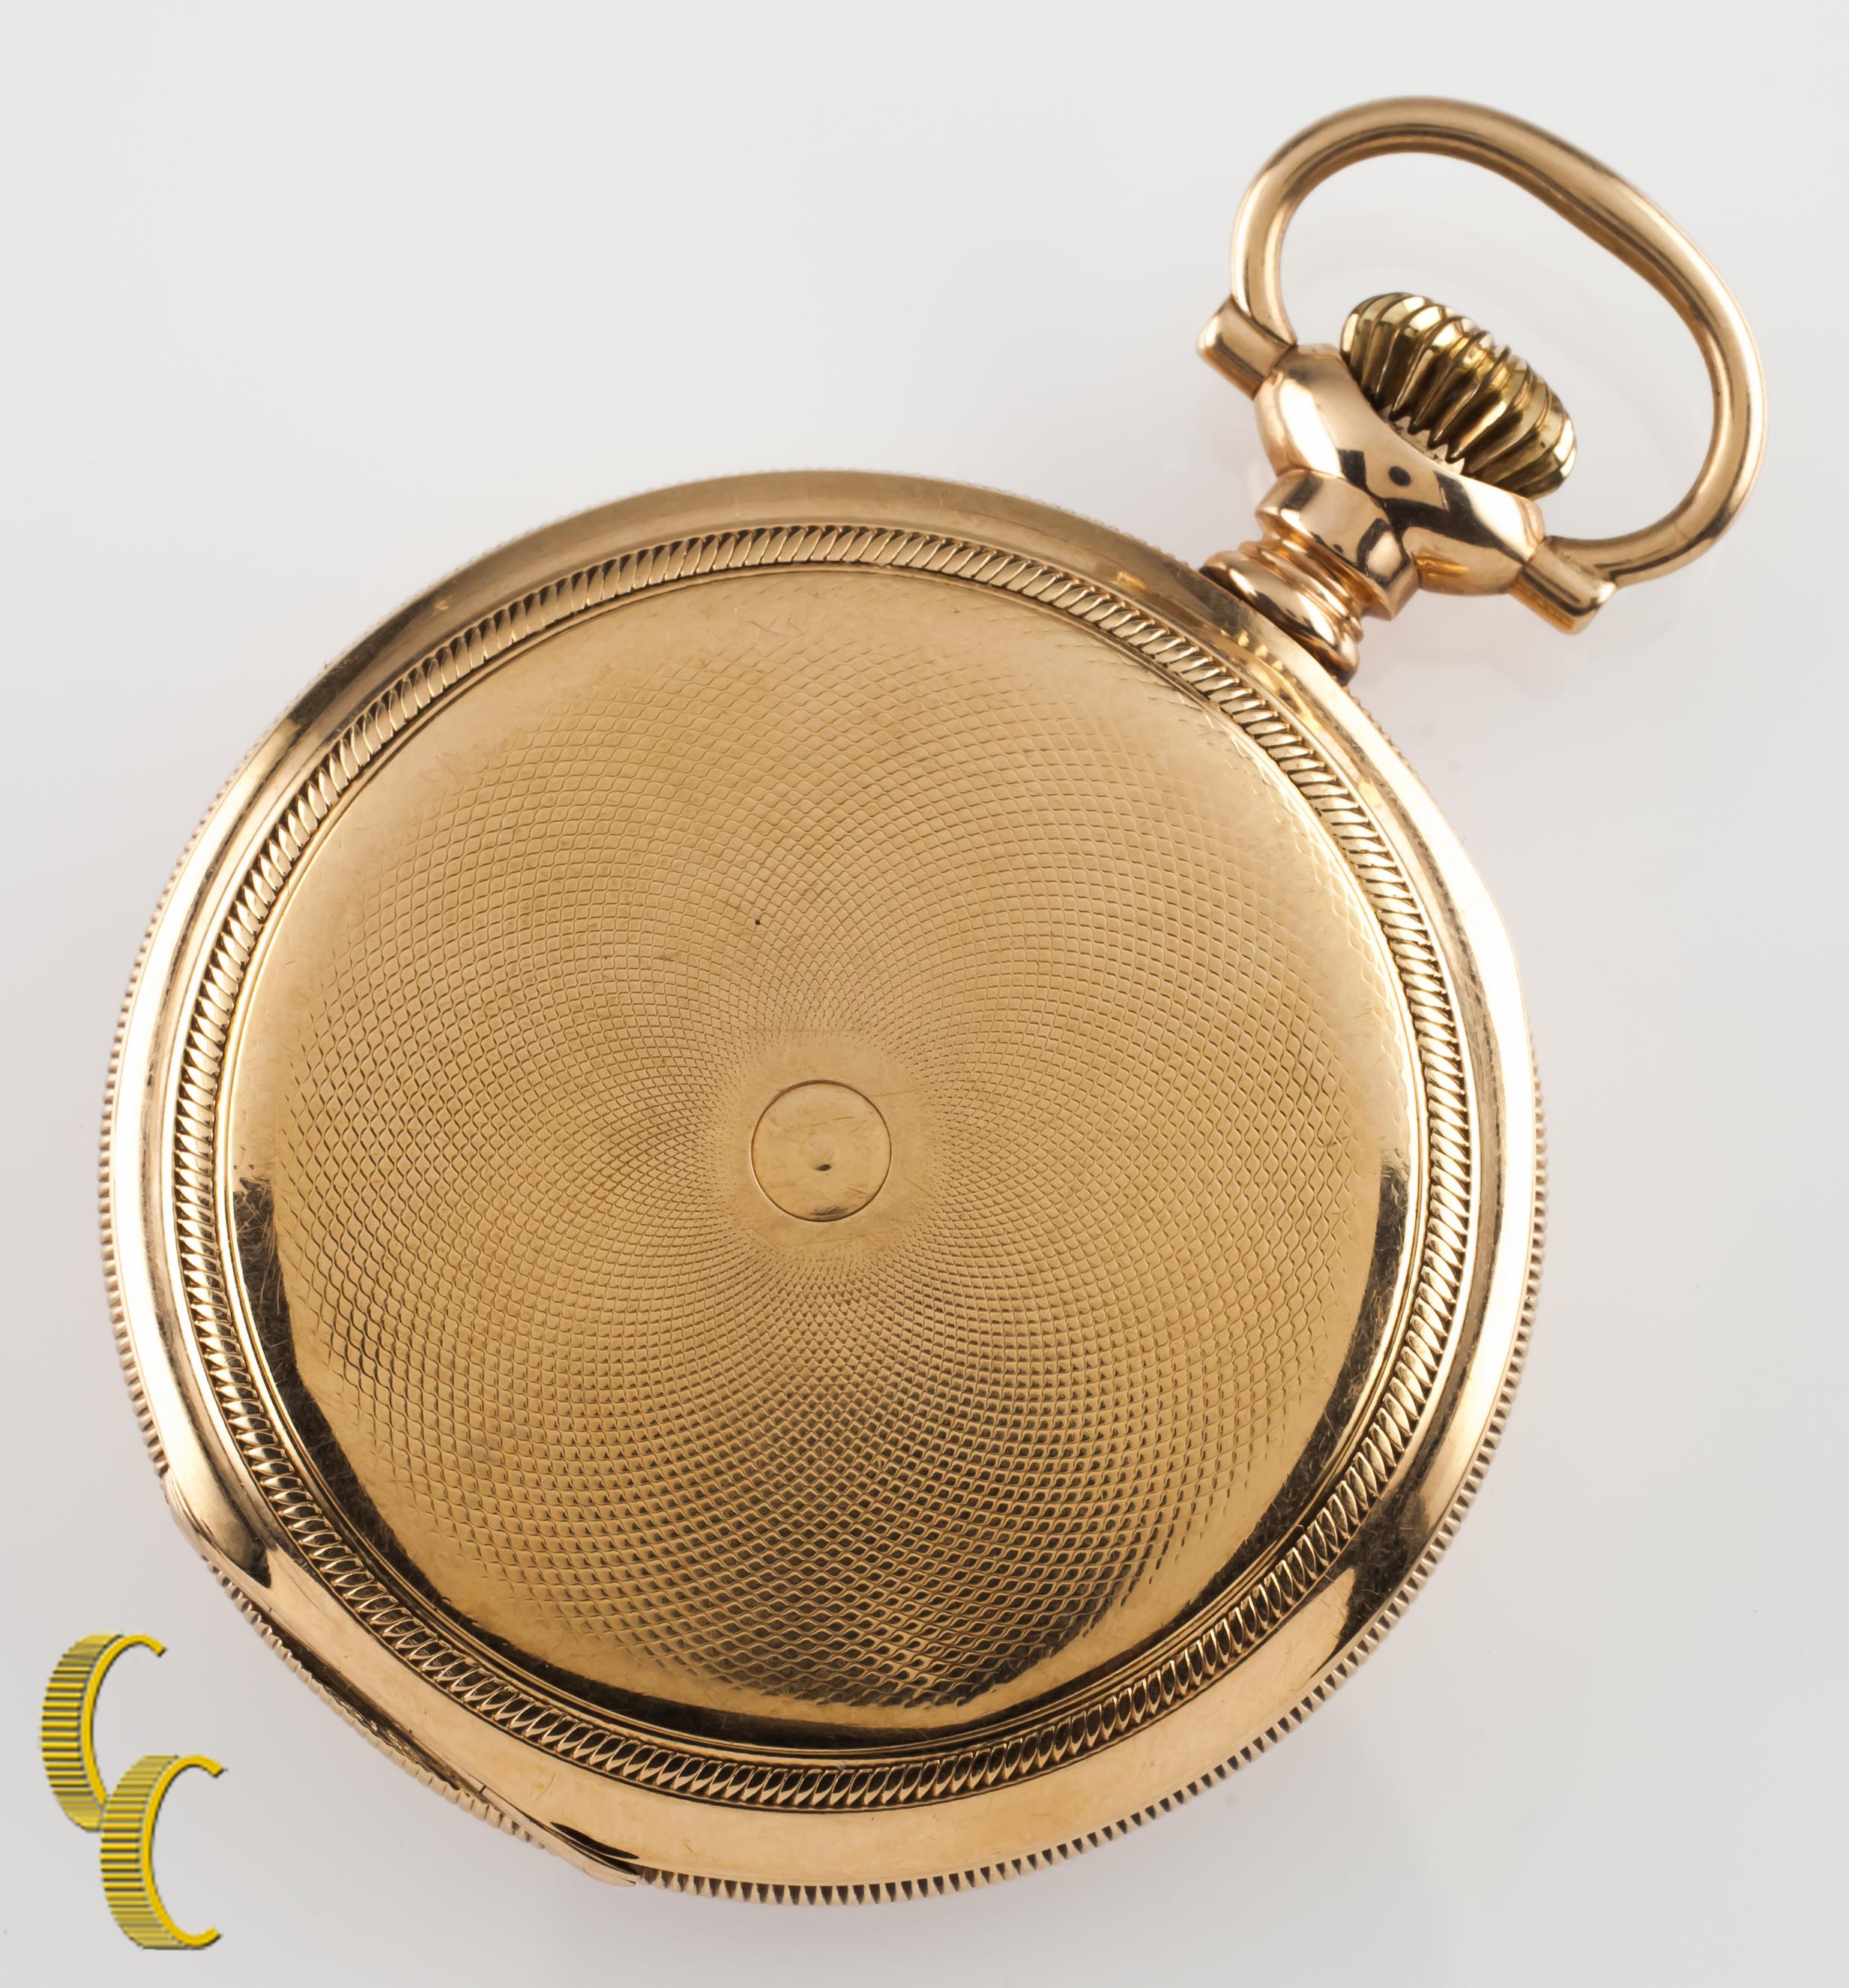 waltham 14k gold pocket watch value